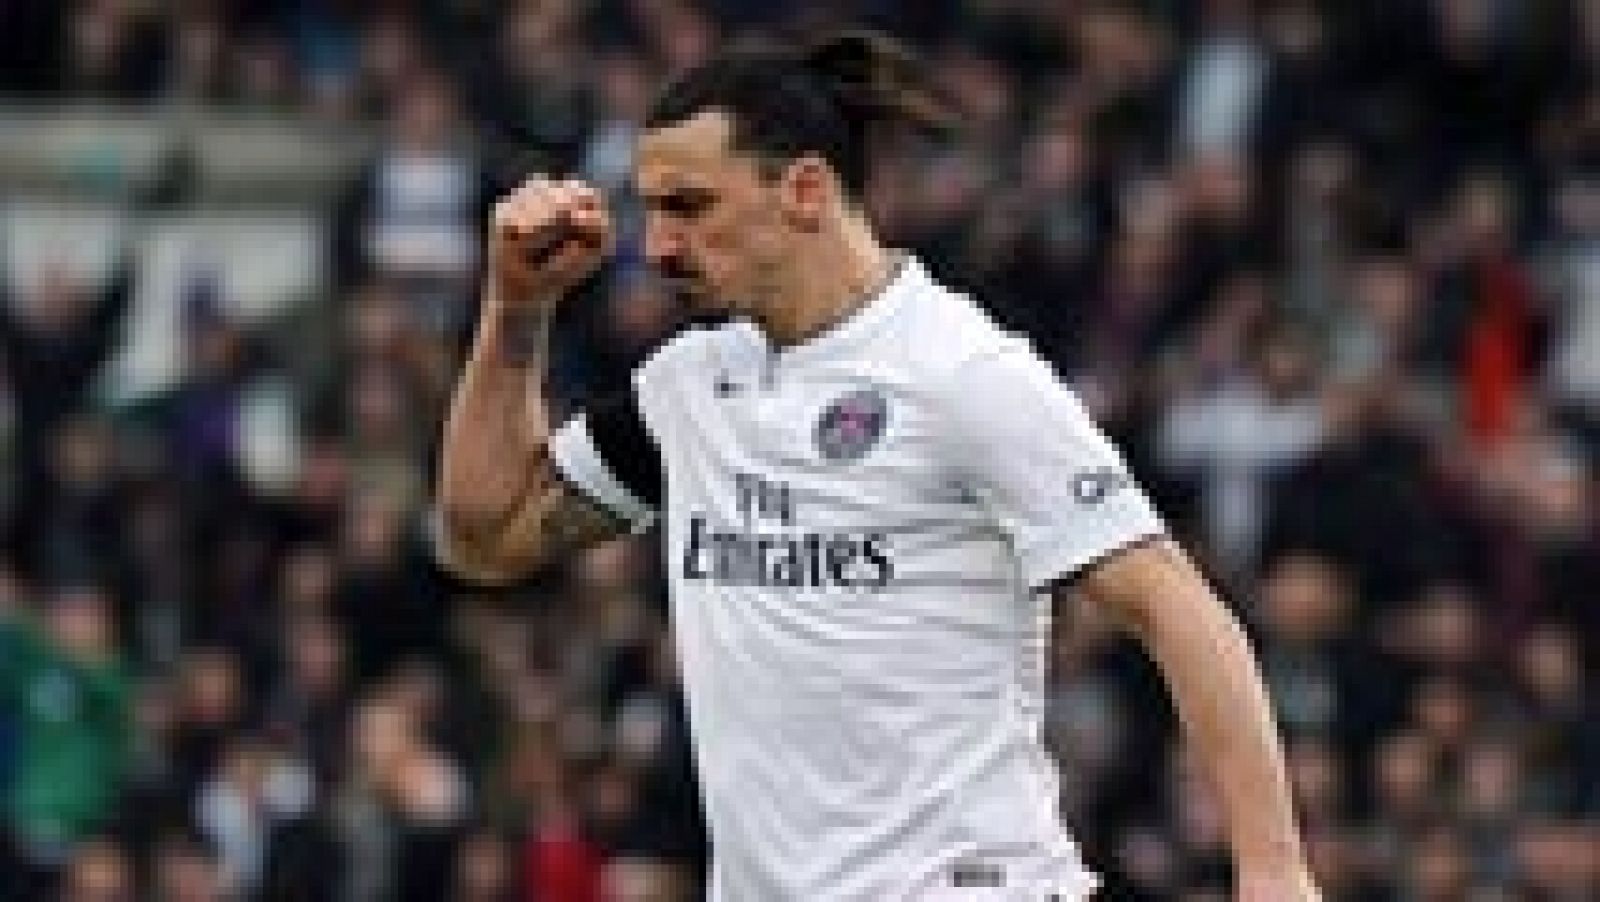 Telediario 1: Ibrahimovic podría ser sancionado por llamar a Francia "país de mierda" | RTVE Play